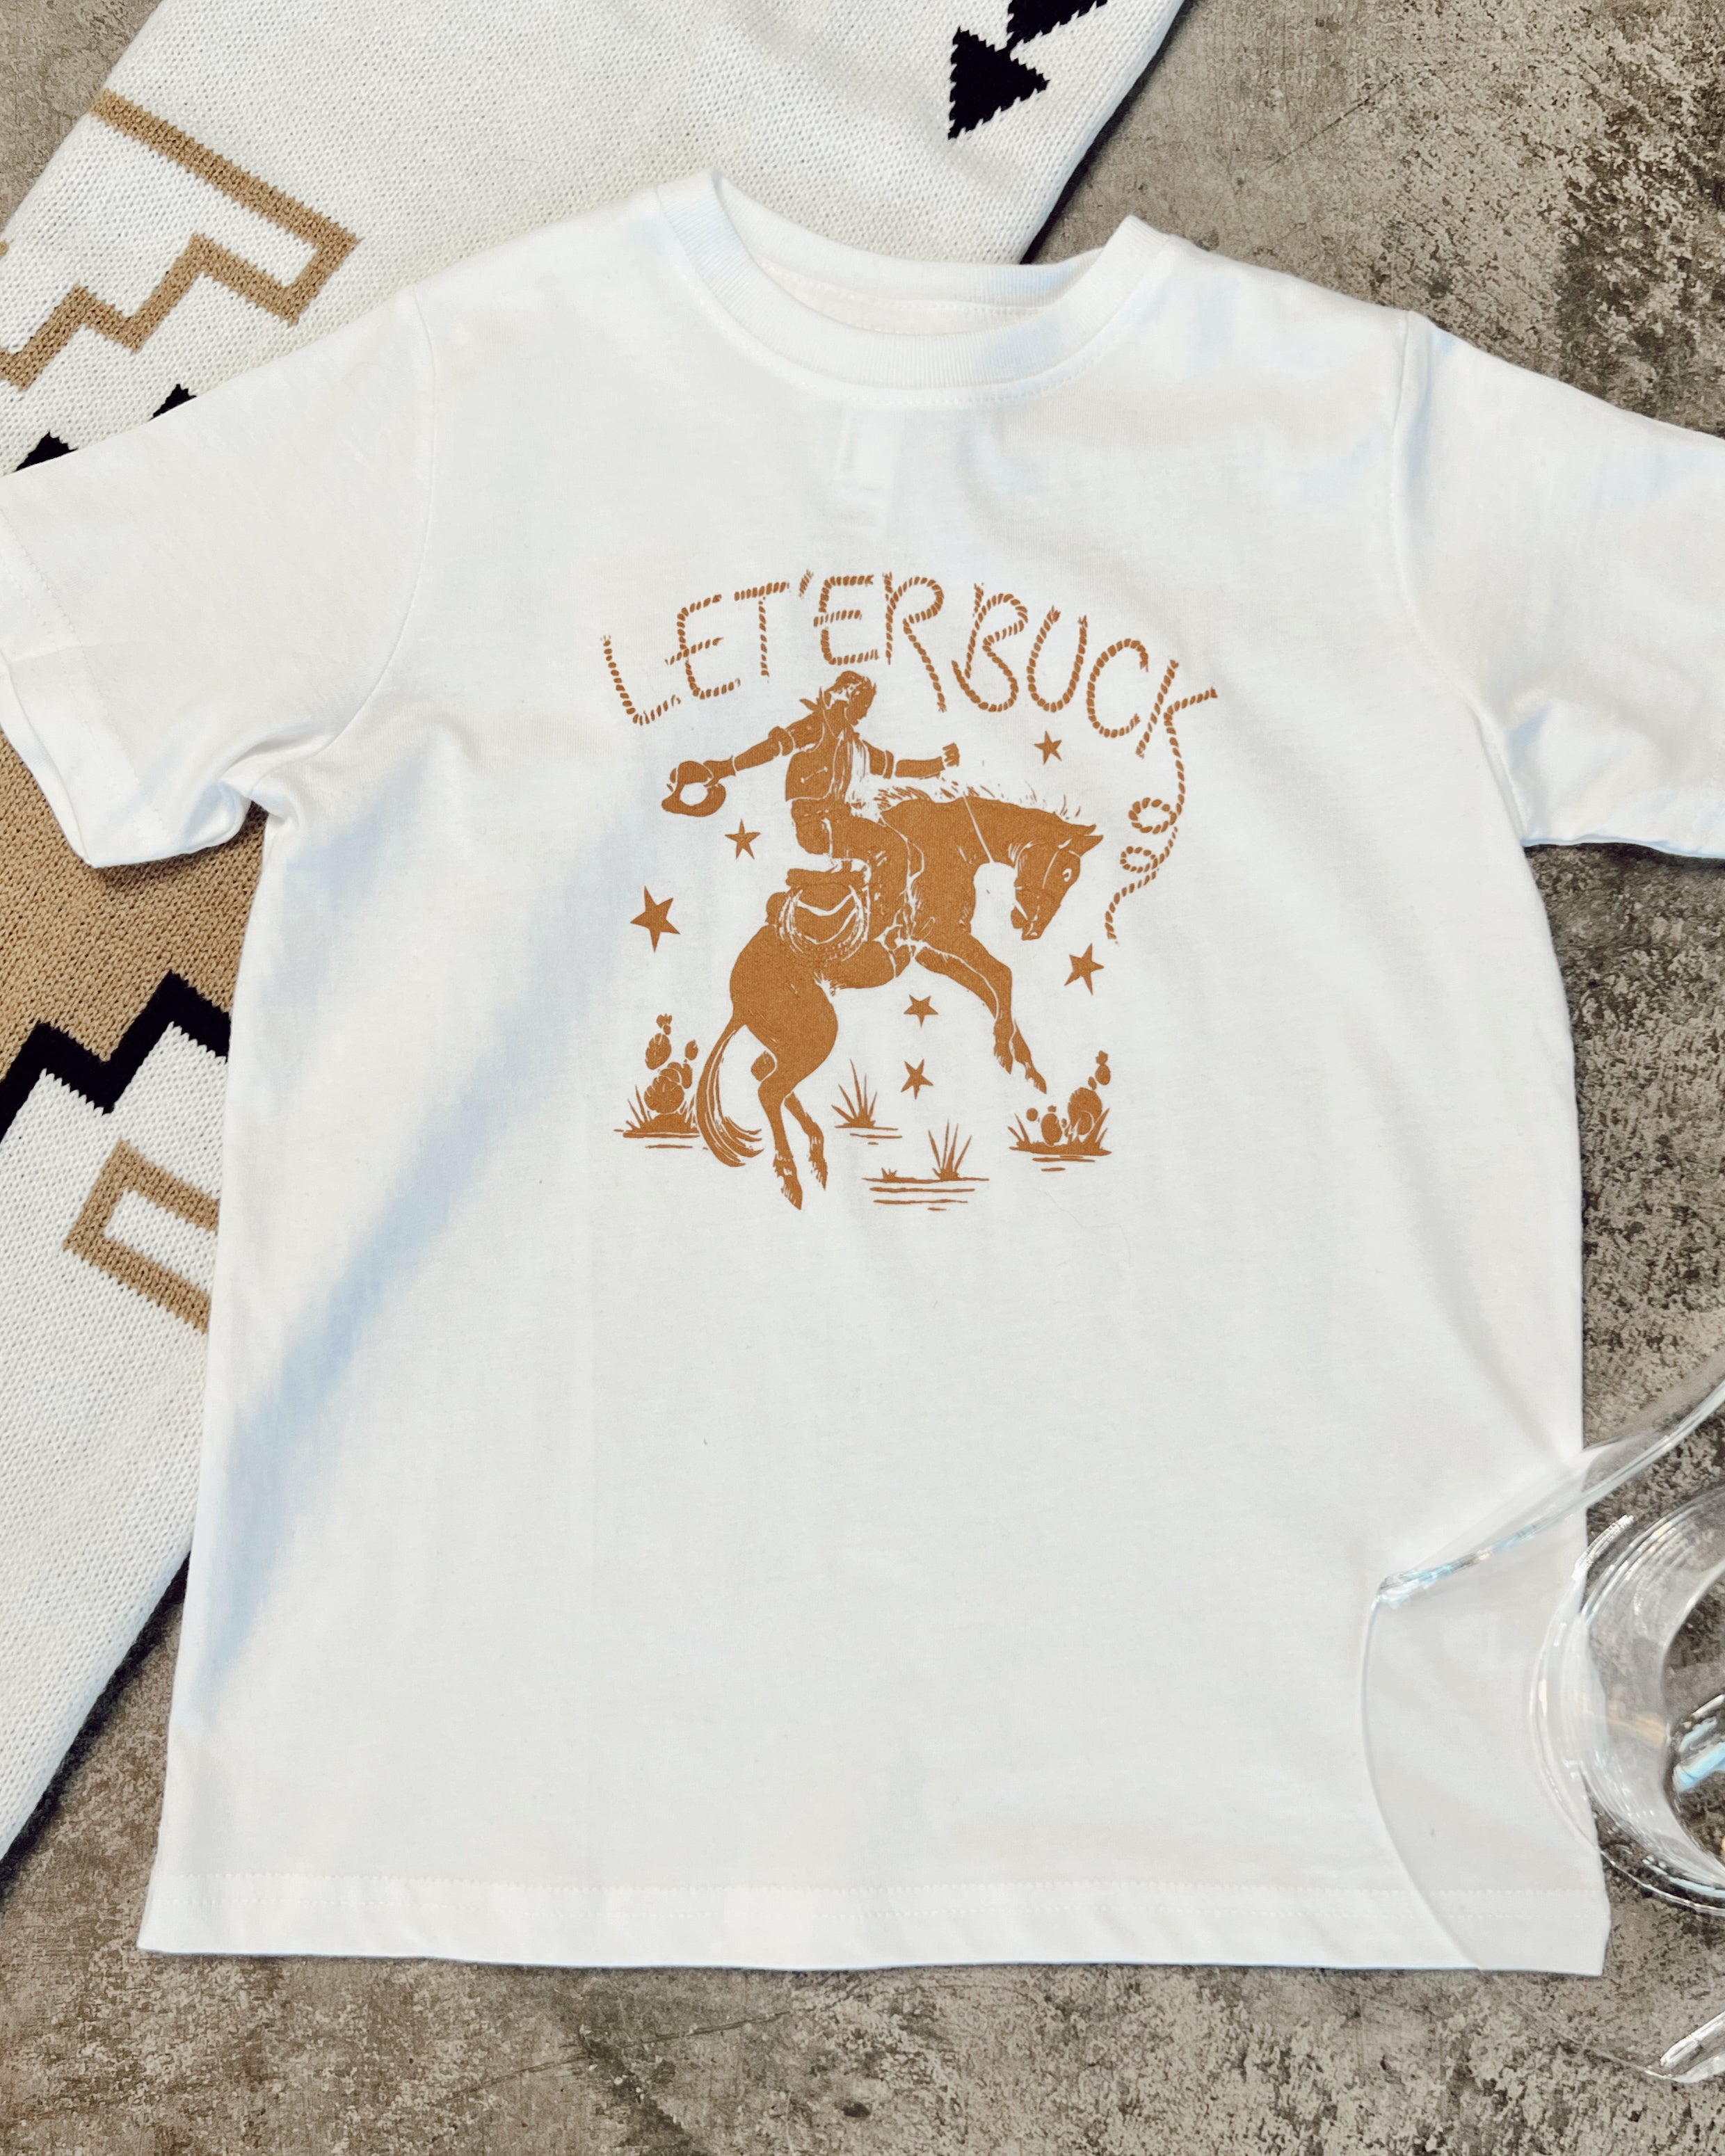 The Let'er Buck Kids T-Shirt